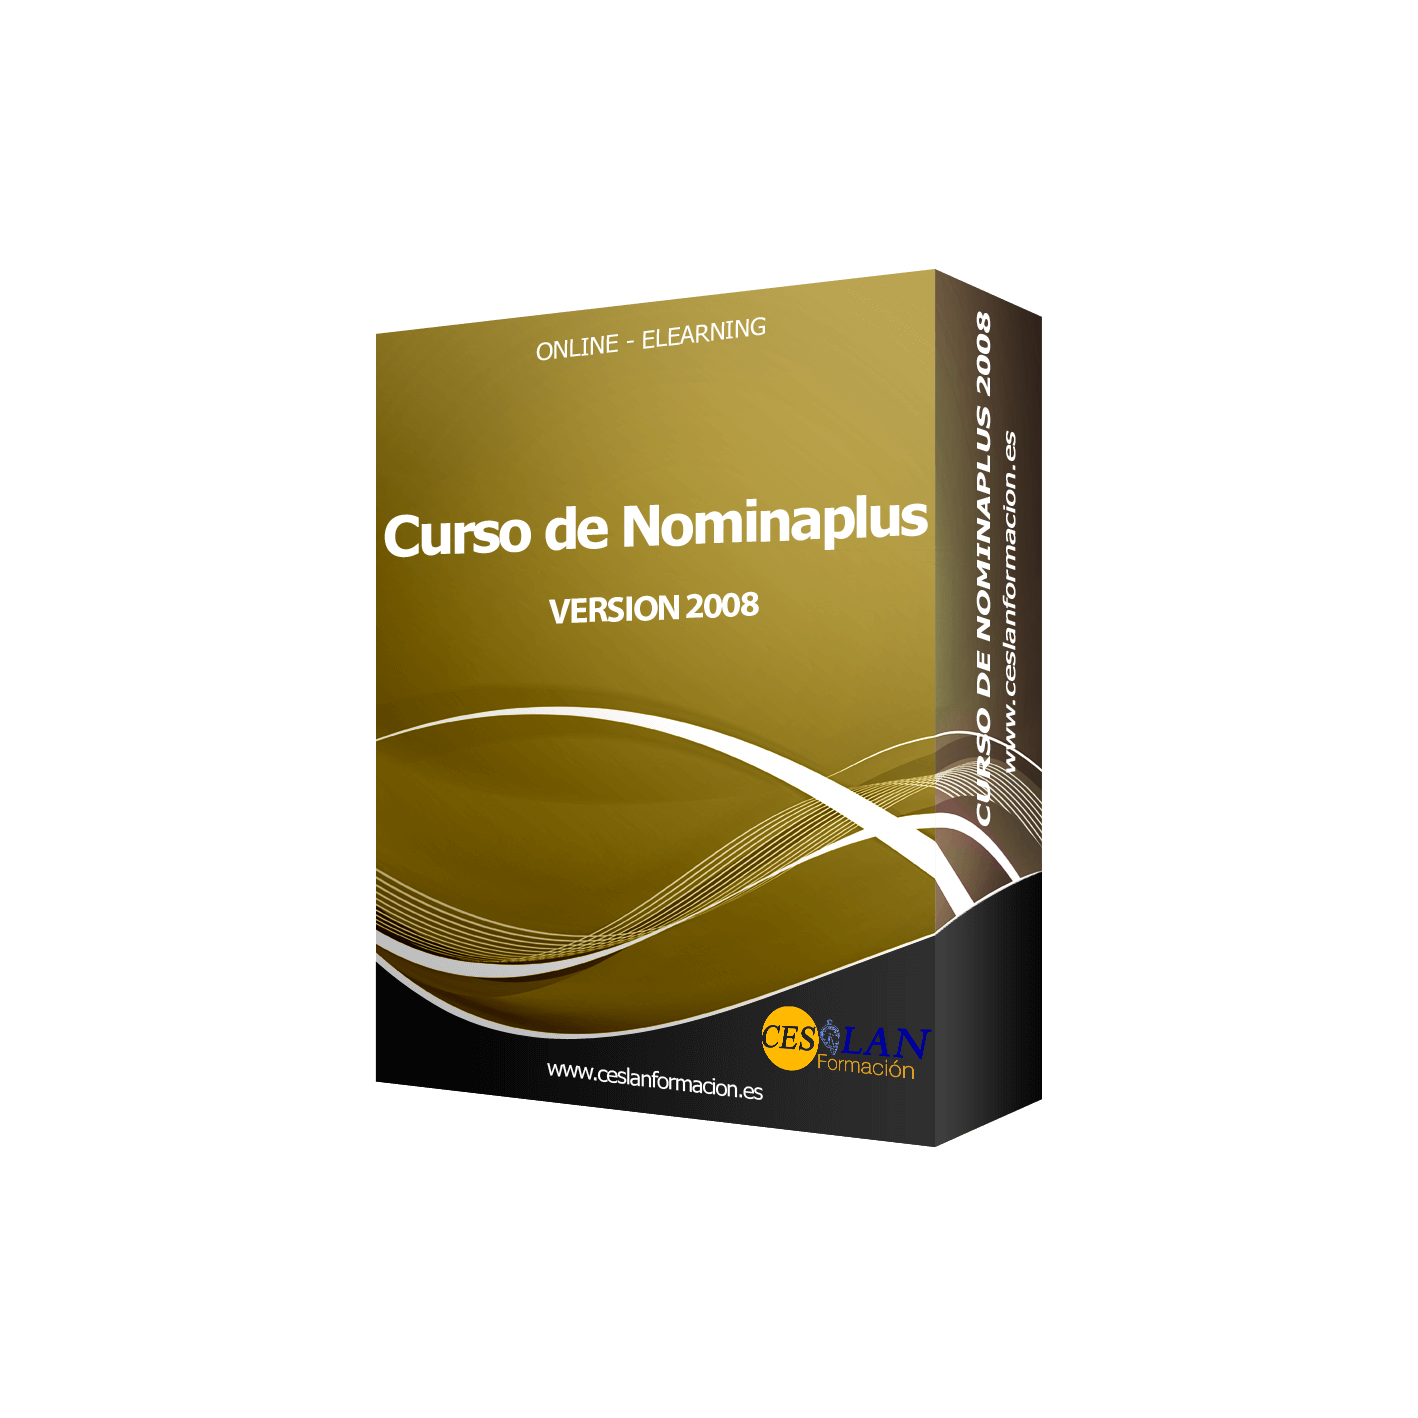 Curso de Nominaplus 2008